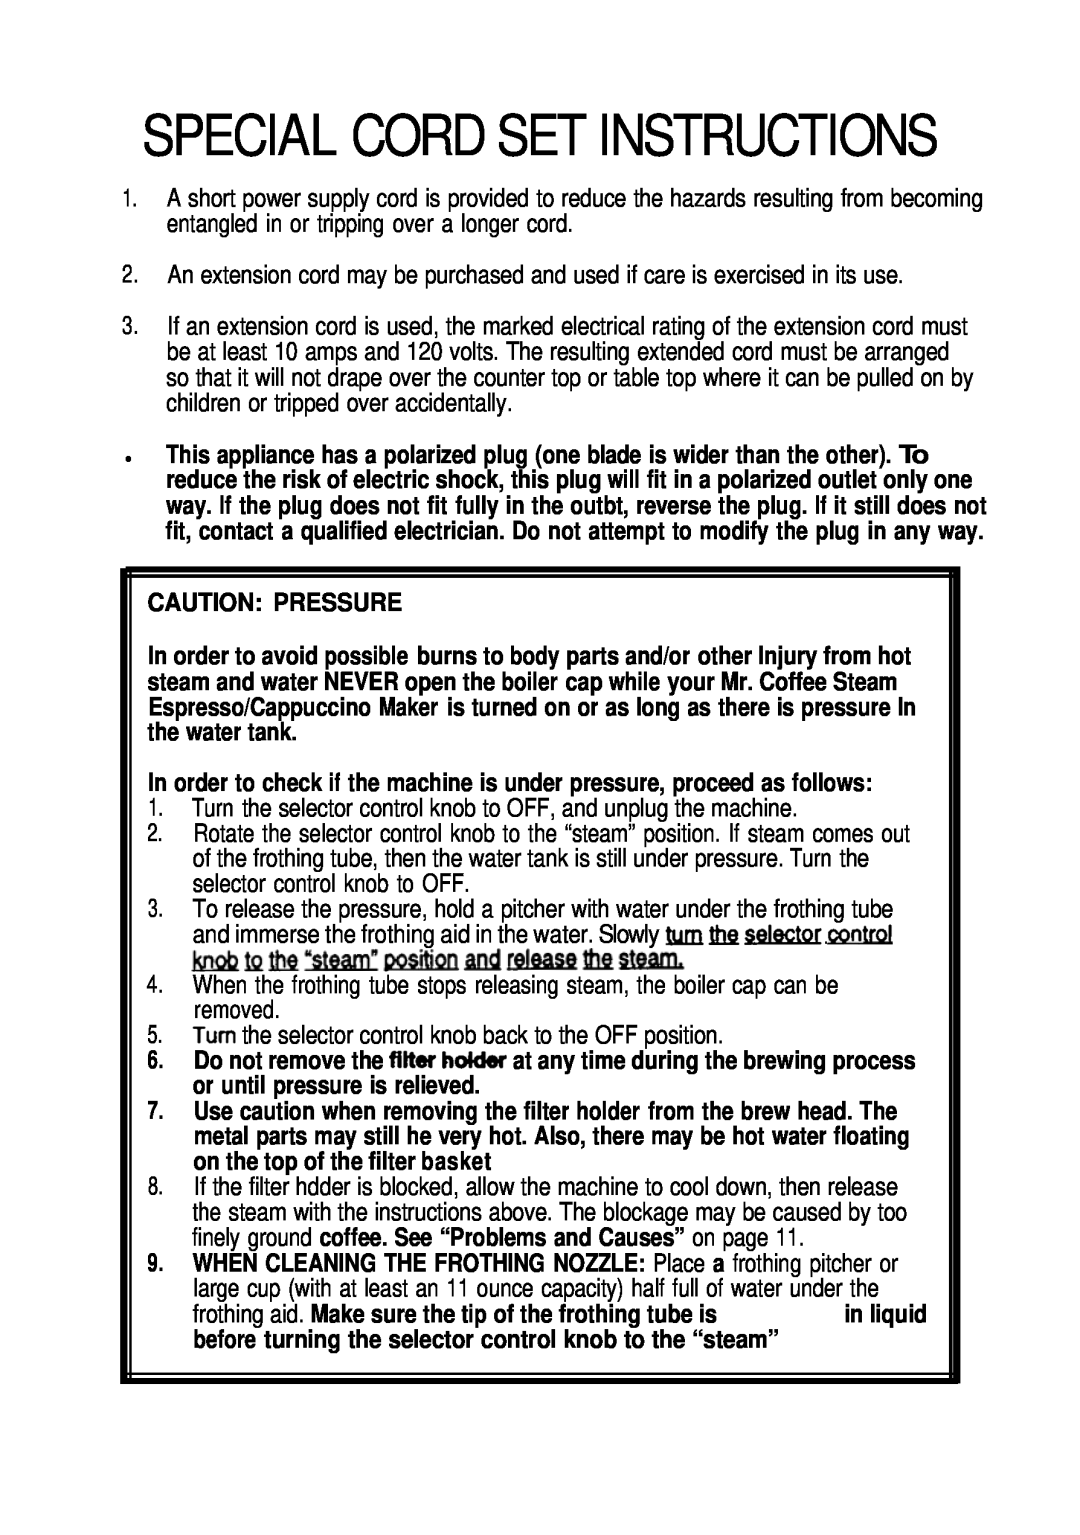 Mr. Coffee ECM9 manual Special Cord Set Instructions, Caution Pressure 